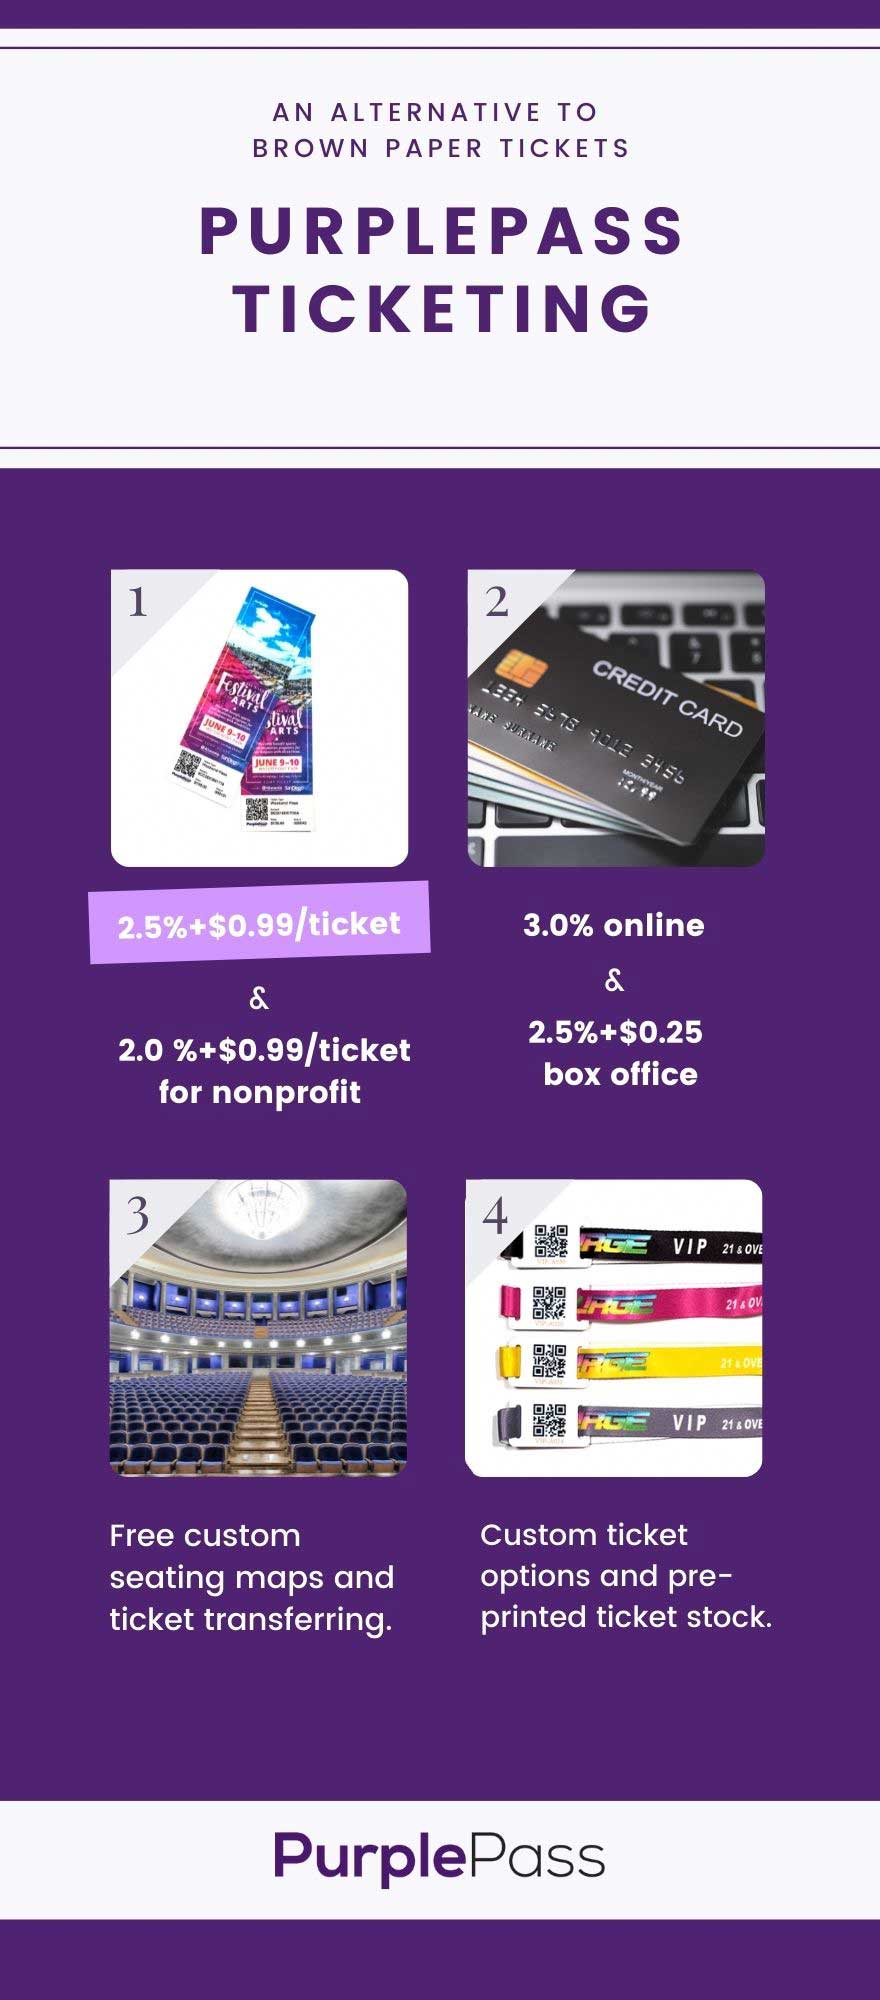 https://www.purplepass.com/blog/wp-content/uploads/2021/07/Purplepass-ticketing-options-vs-brown-paper-ticket.jpg